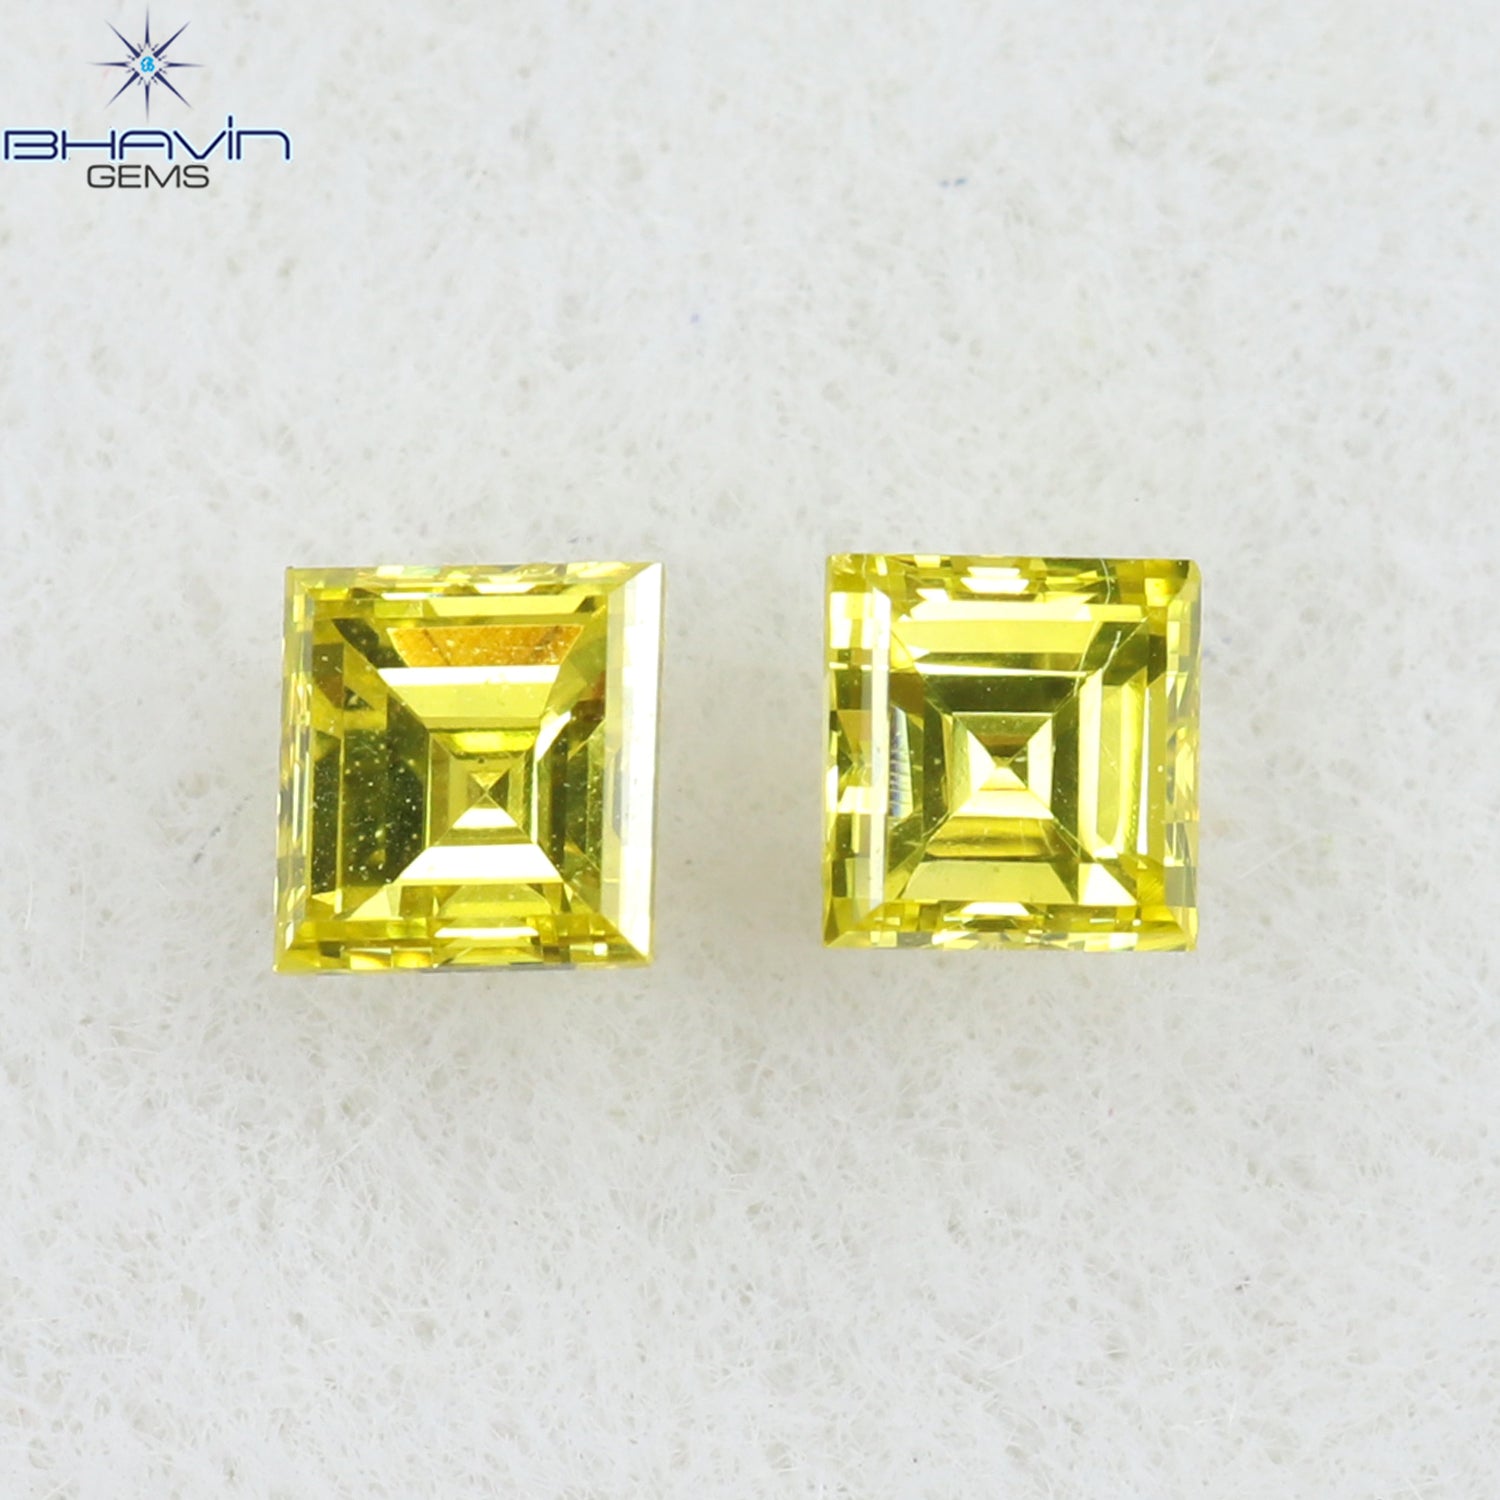 0.16 CT/2 Pcs Square Cut Natural Diamond Enhanced Yellow Color VS1 Clarity (2.32 MM)